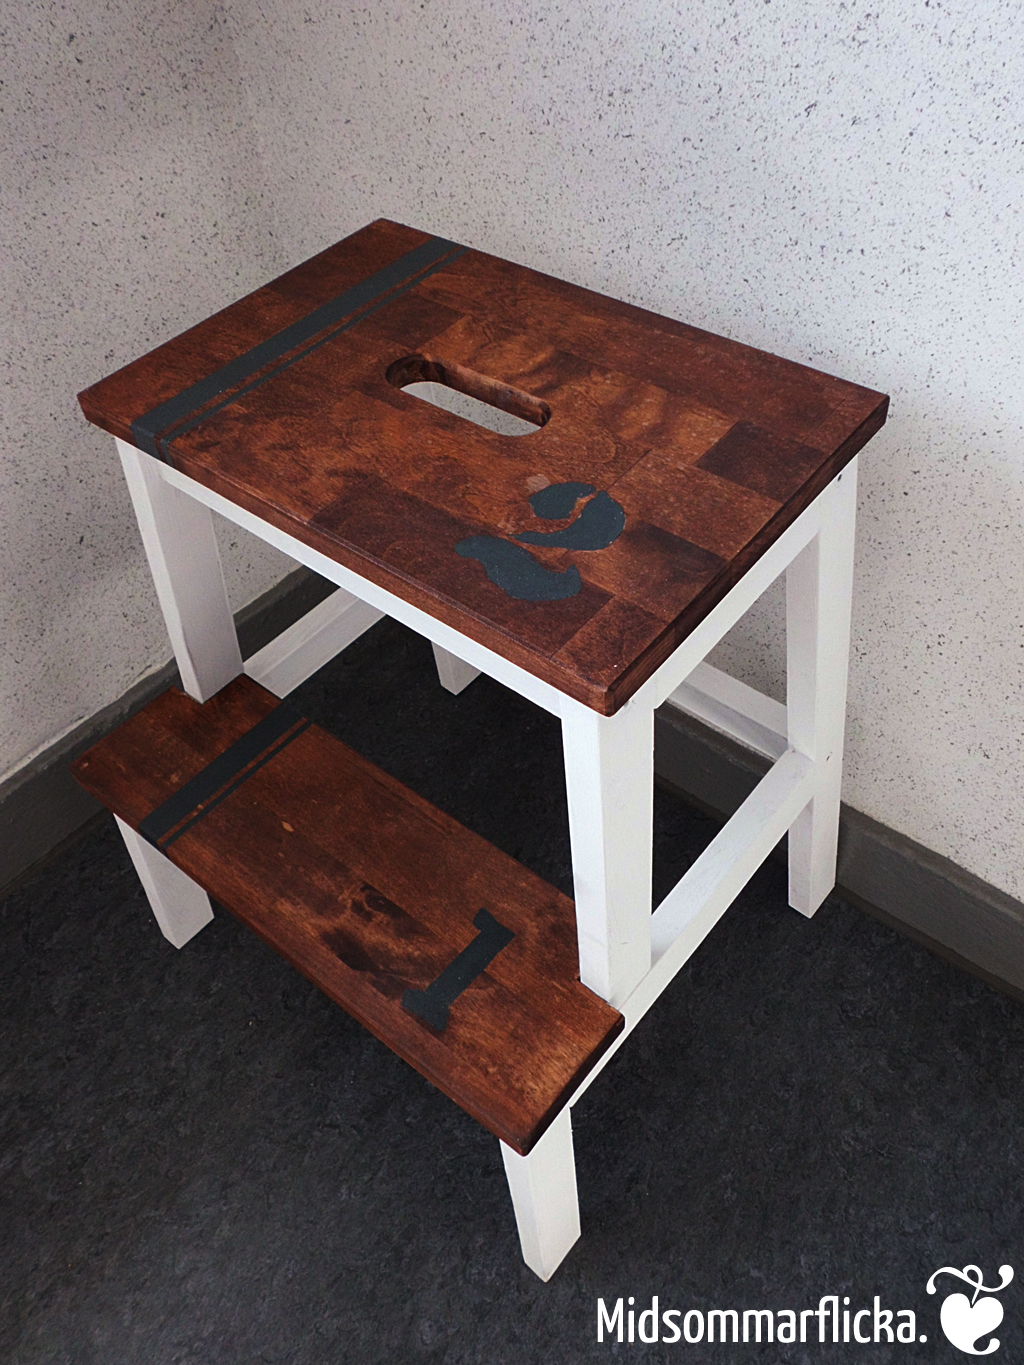 Download Ikea bekvam wooden step stool Plans DIY small 